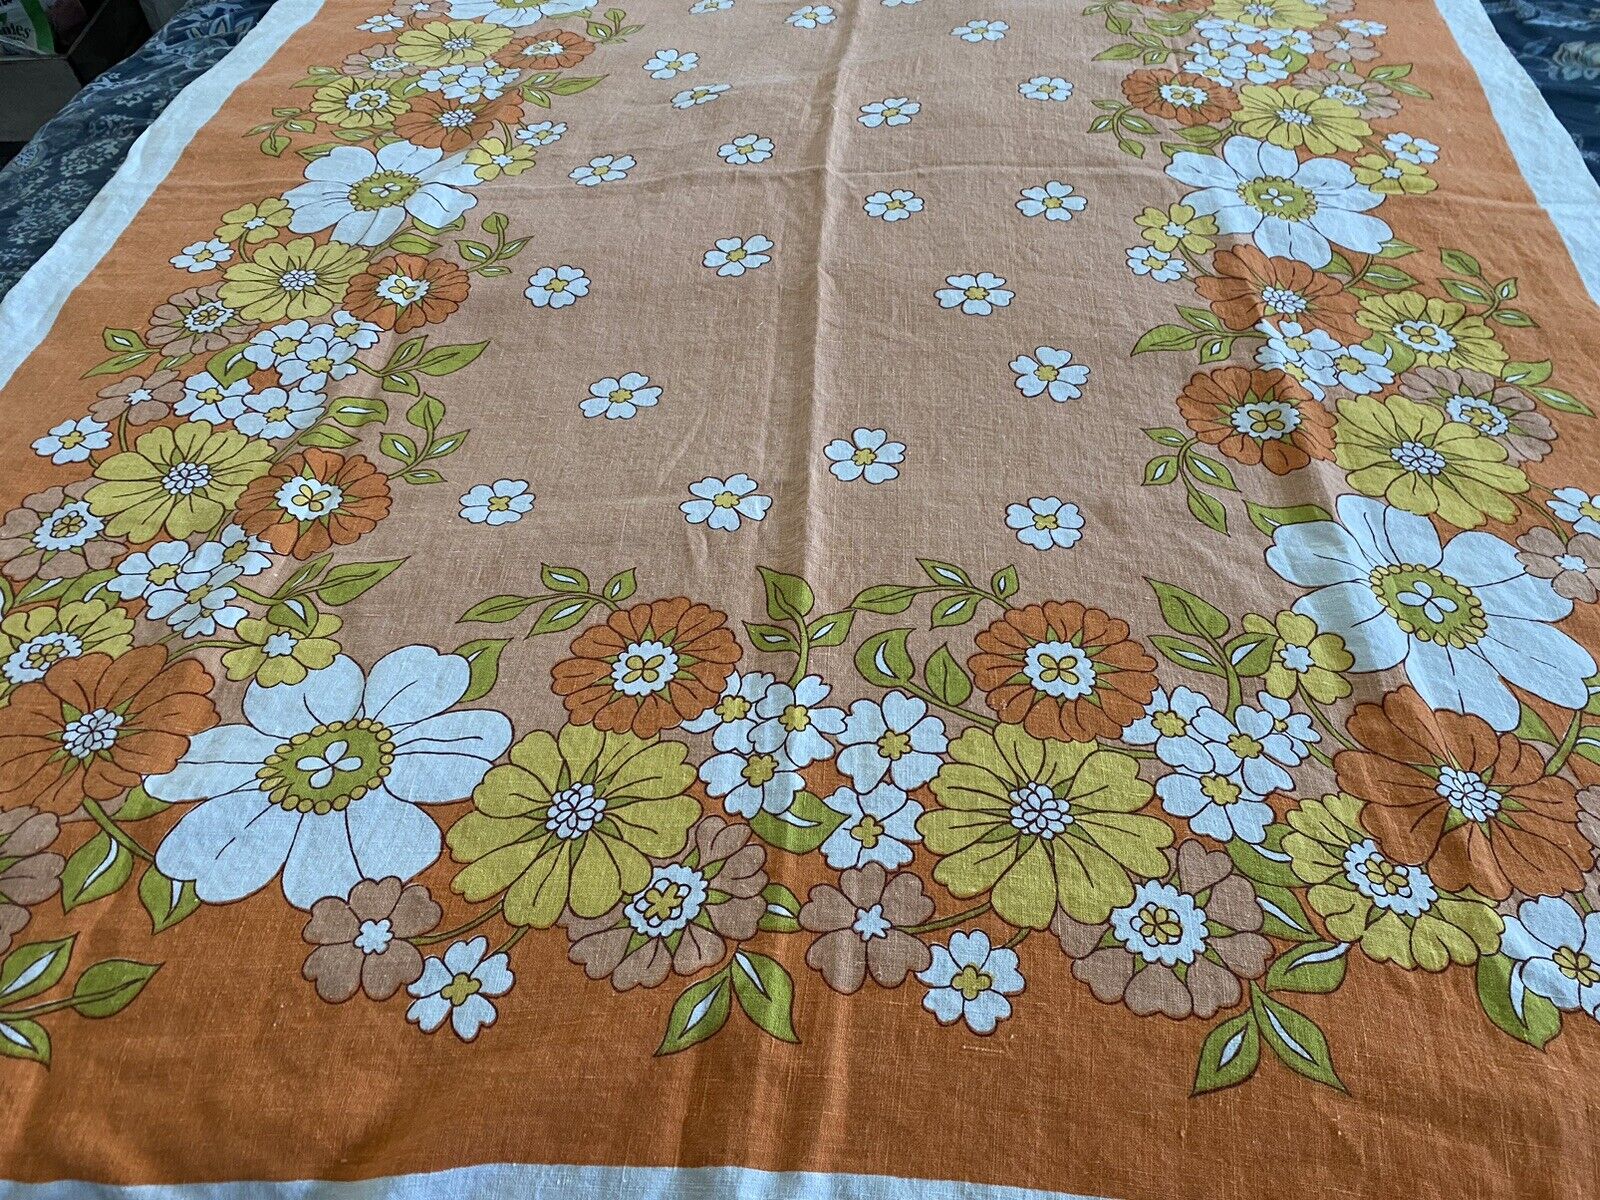 Vintage 1970s Mod Daisy Flower Power Cotton Tablecloth 49x62 Happy & Bright